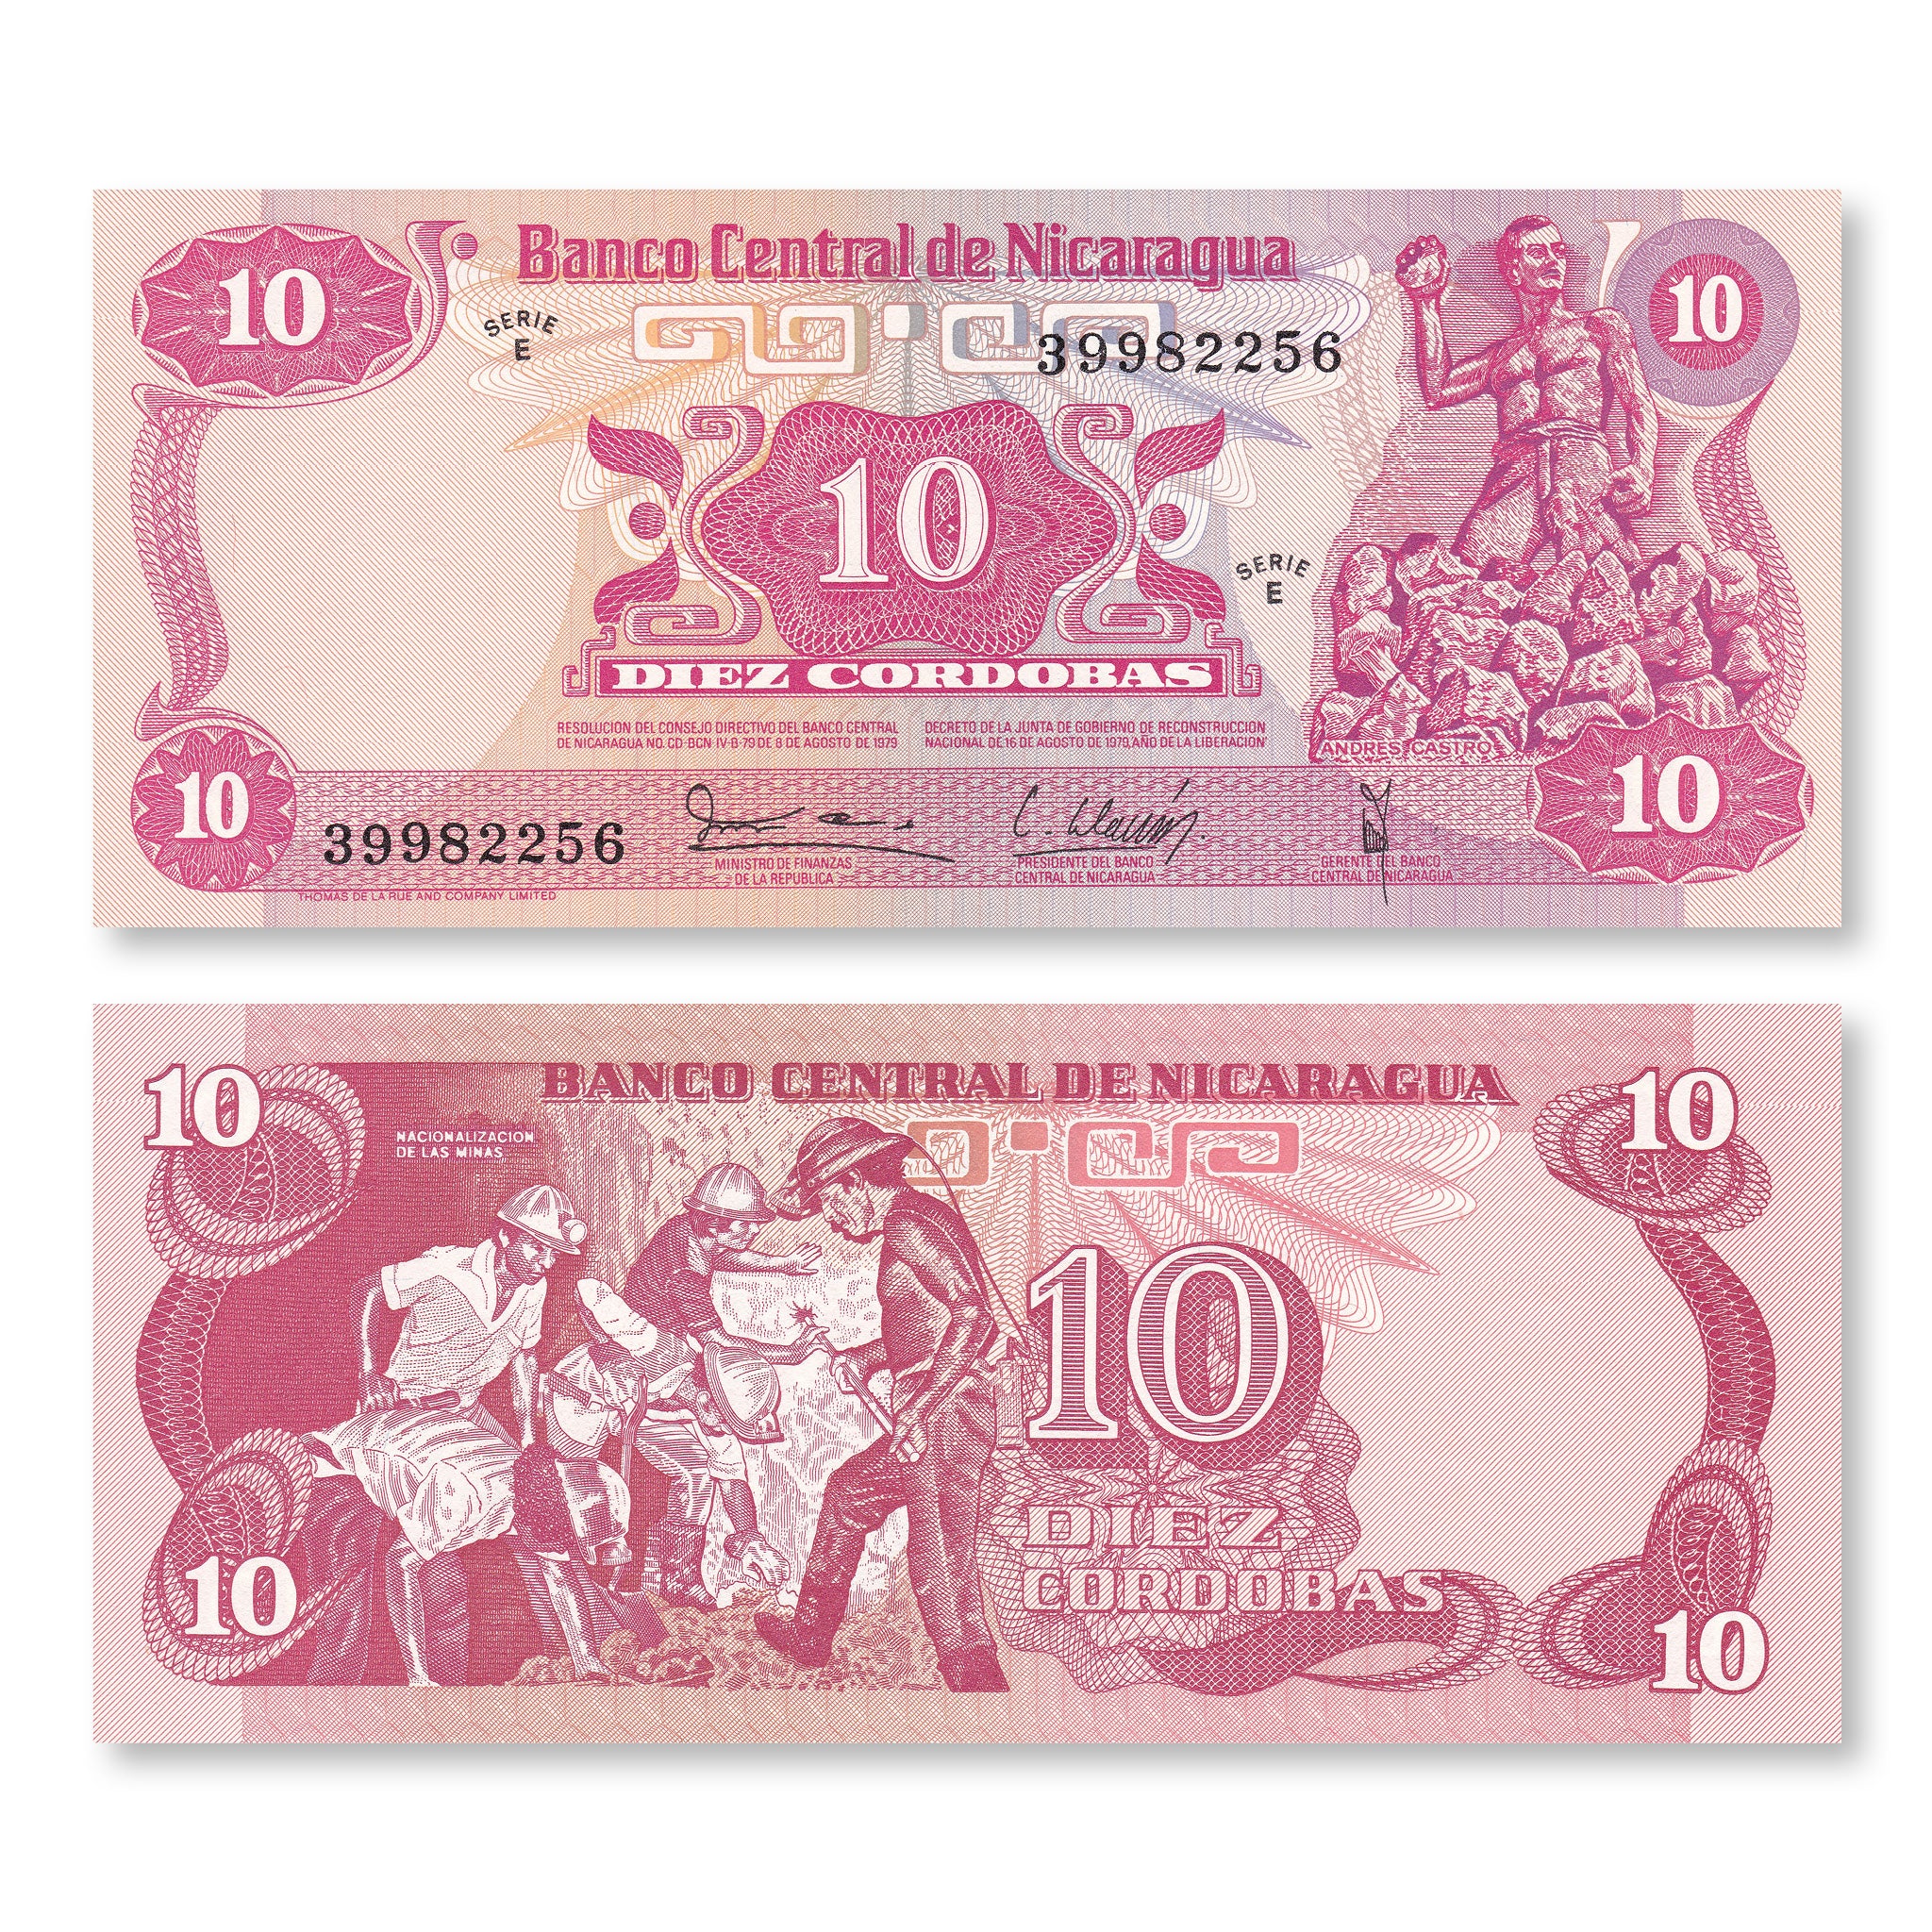 Nicaragua 10 Córdobas, 1979, B428a, P134, UNC - Robert's World Money - World Banknotes